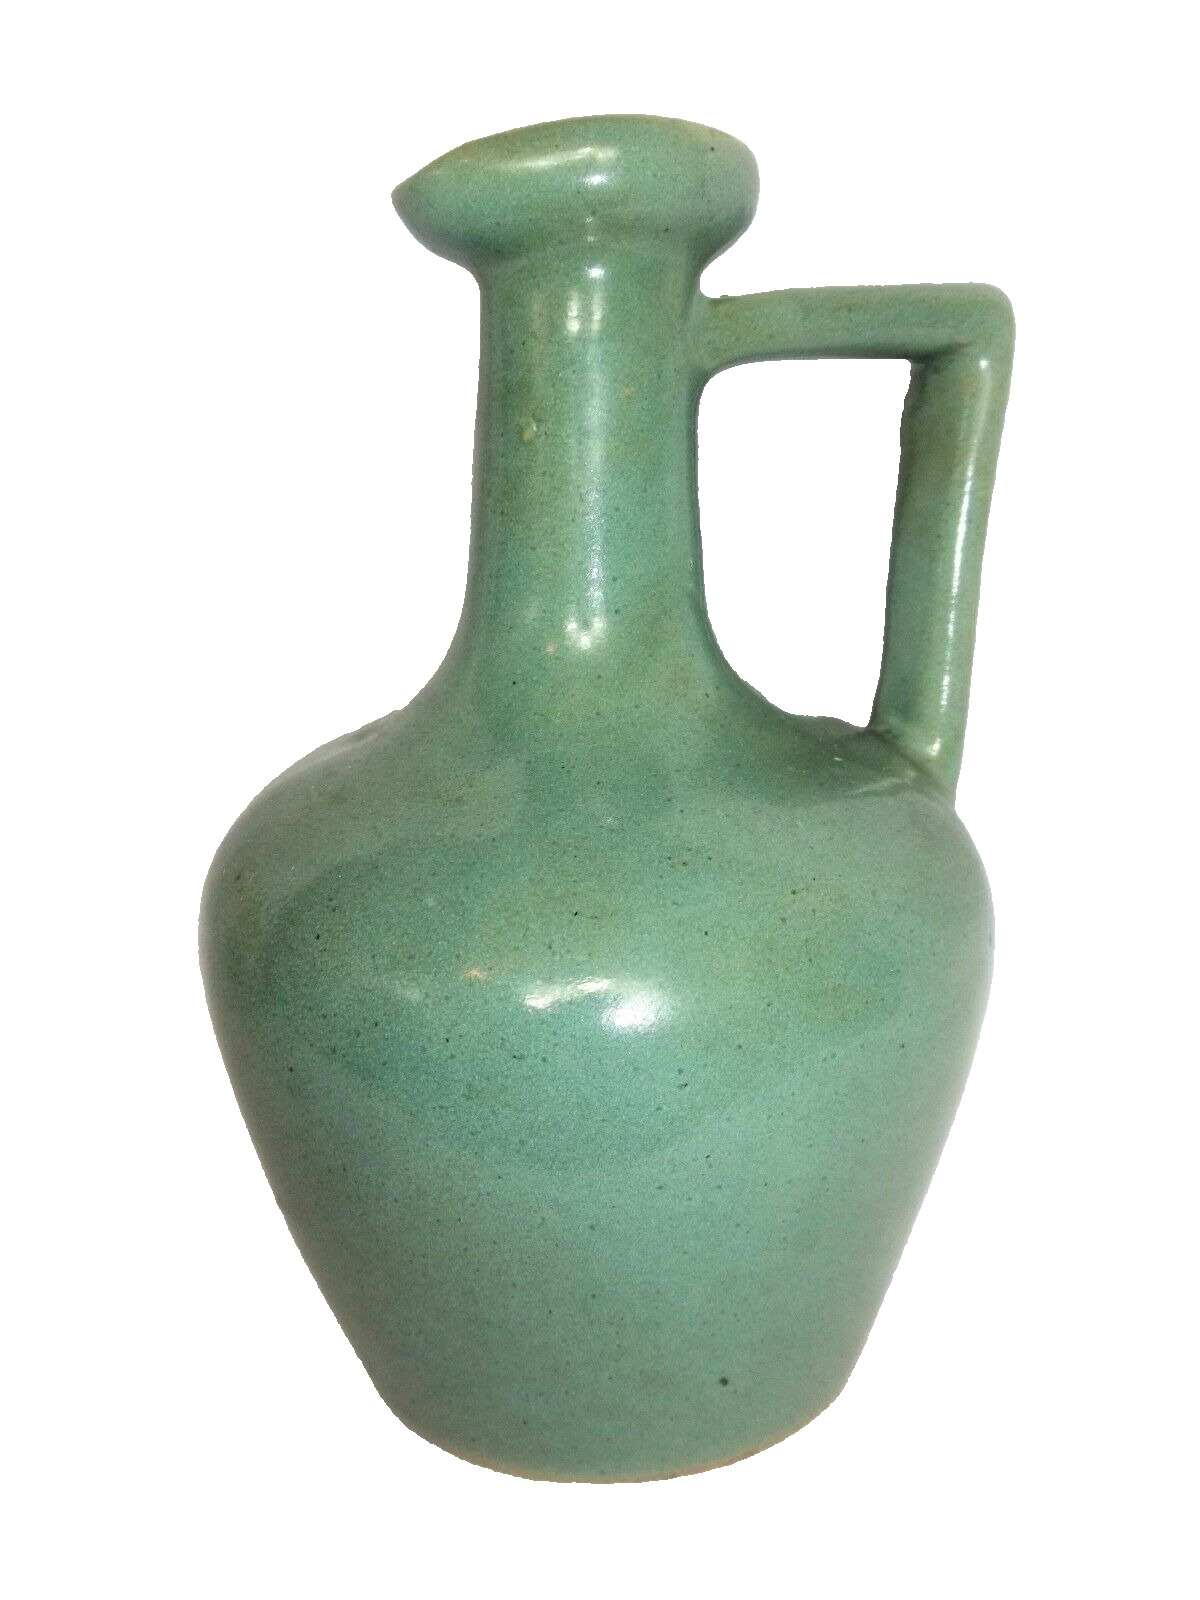 UNIQUE-Antique Vintage Handmade Blue-Green Turquoise Glazed Pottery Pitcher Ewer